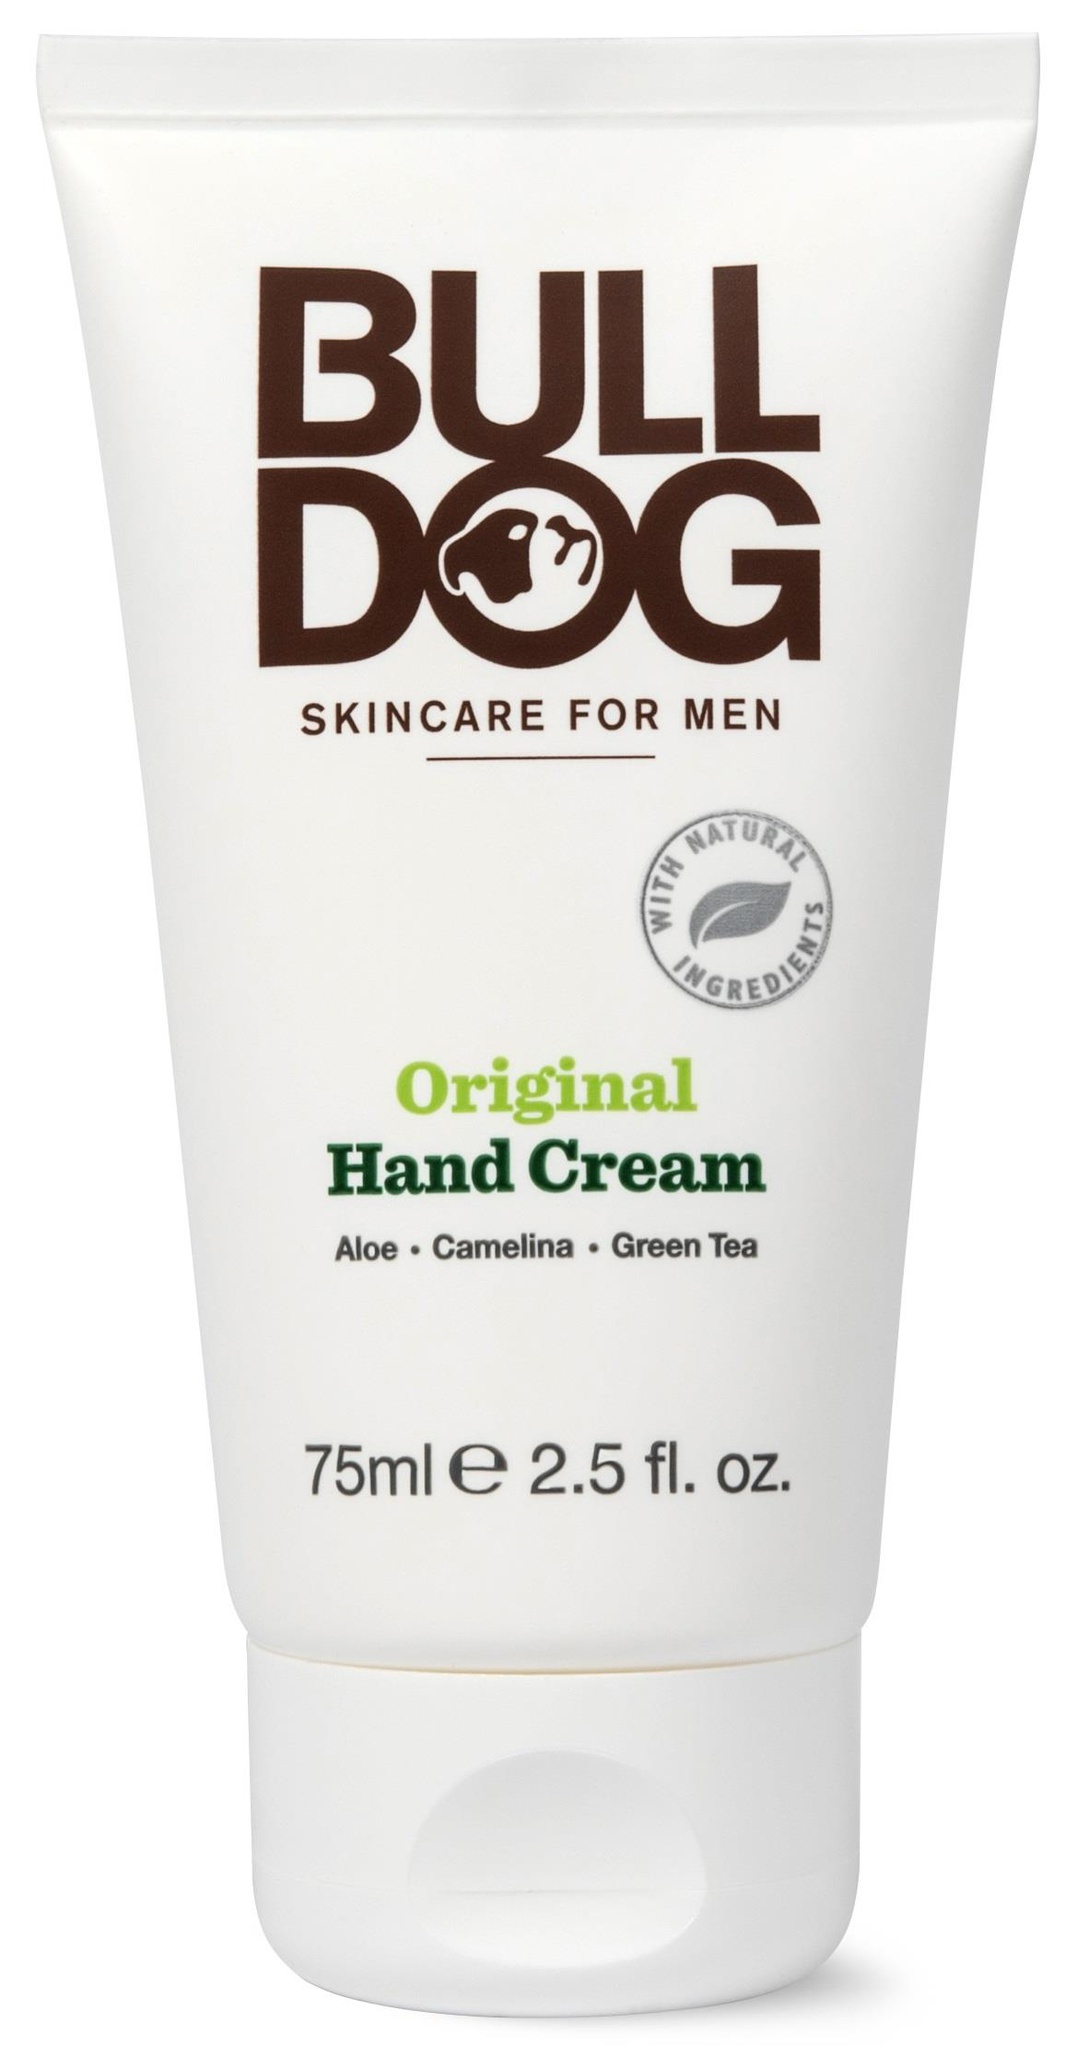 Bulldog Original Hand Cream